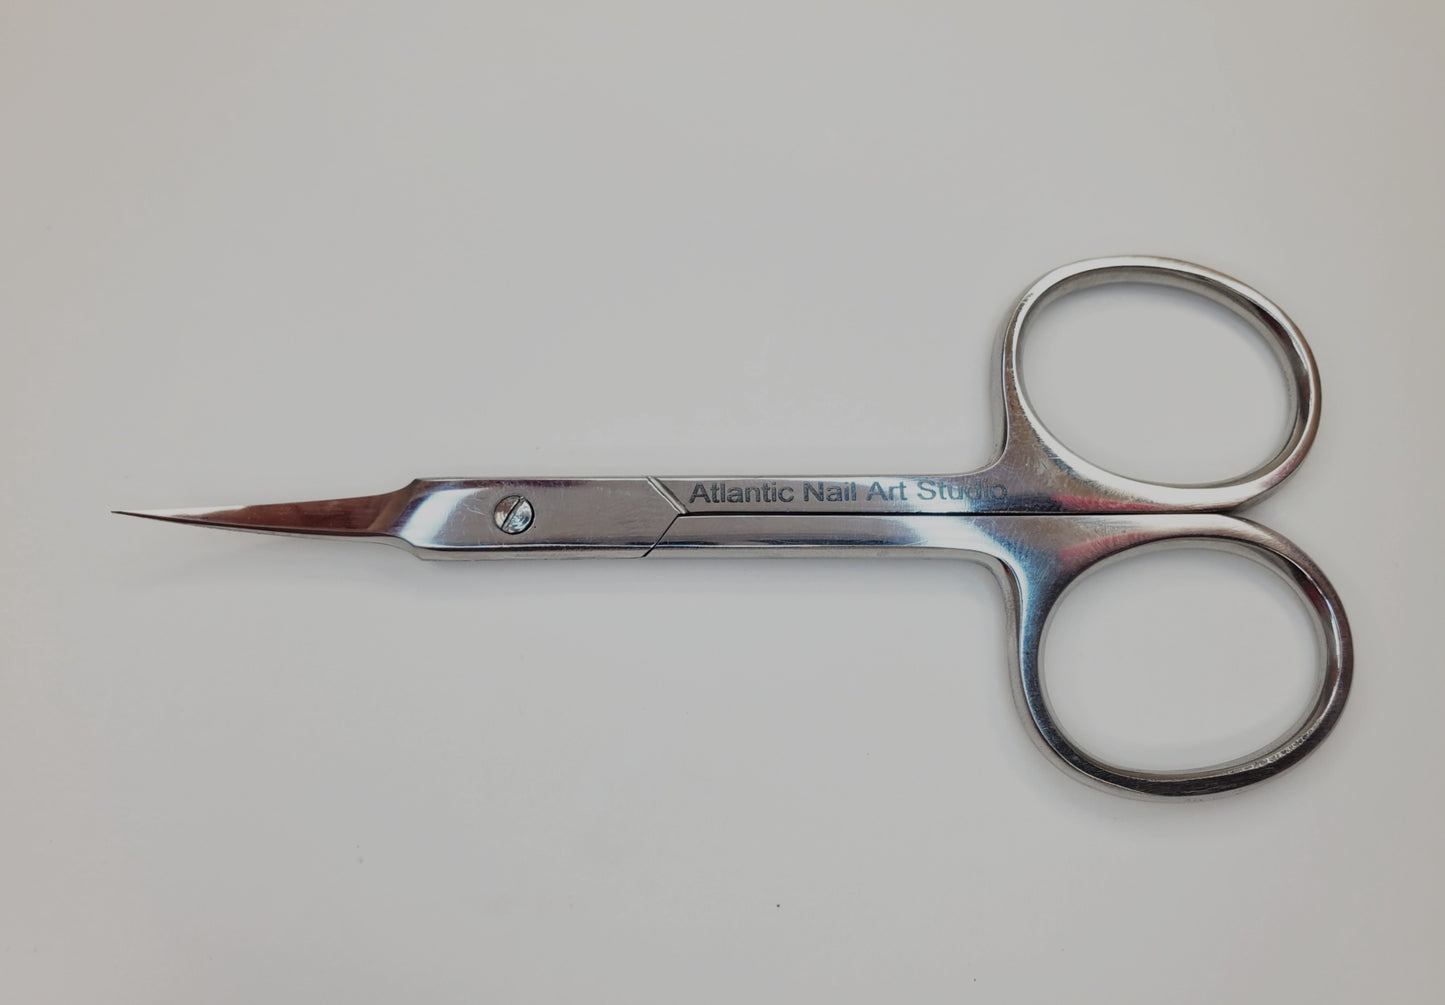 Atlantic Nail Art Studio - Cuticle scissors 102.32.